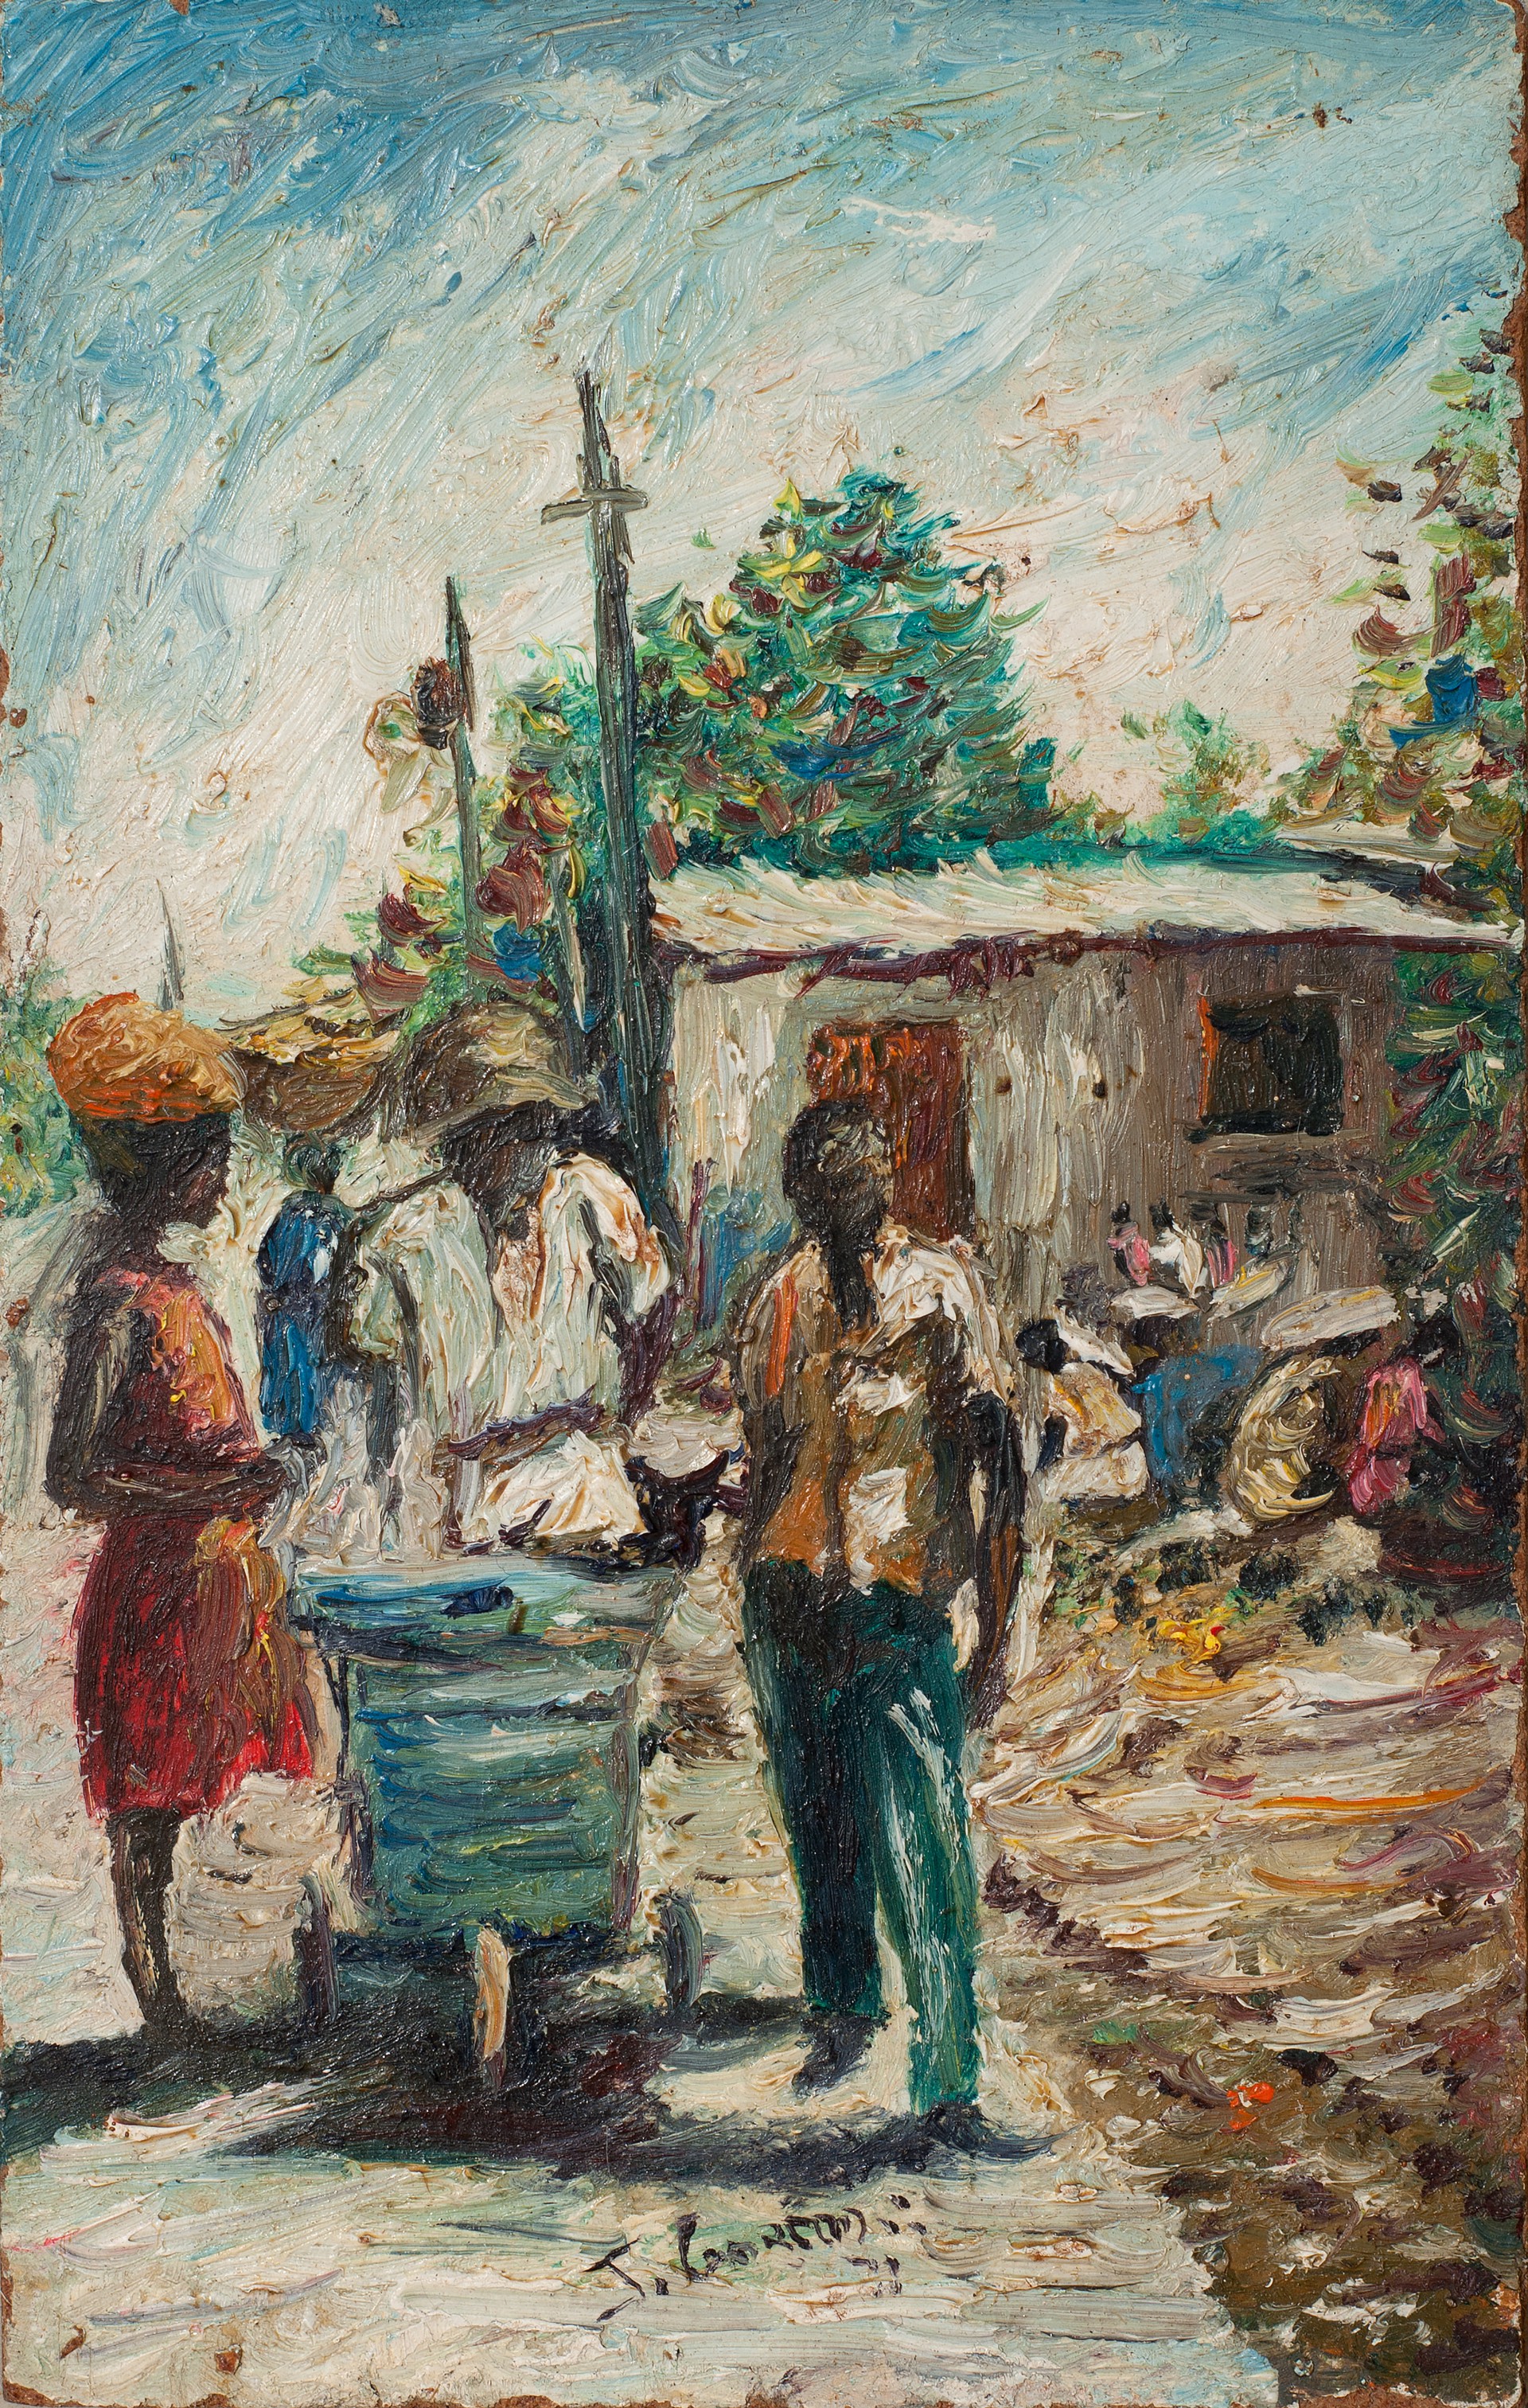 Fresco Merchant #3-1-93GSN by Jacquelin (Jacques) Garcon (Haitian, b.1942)